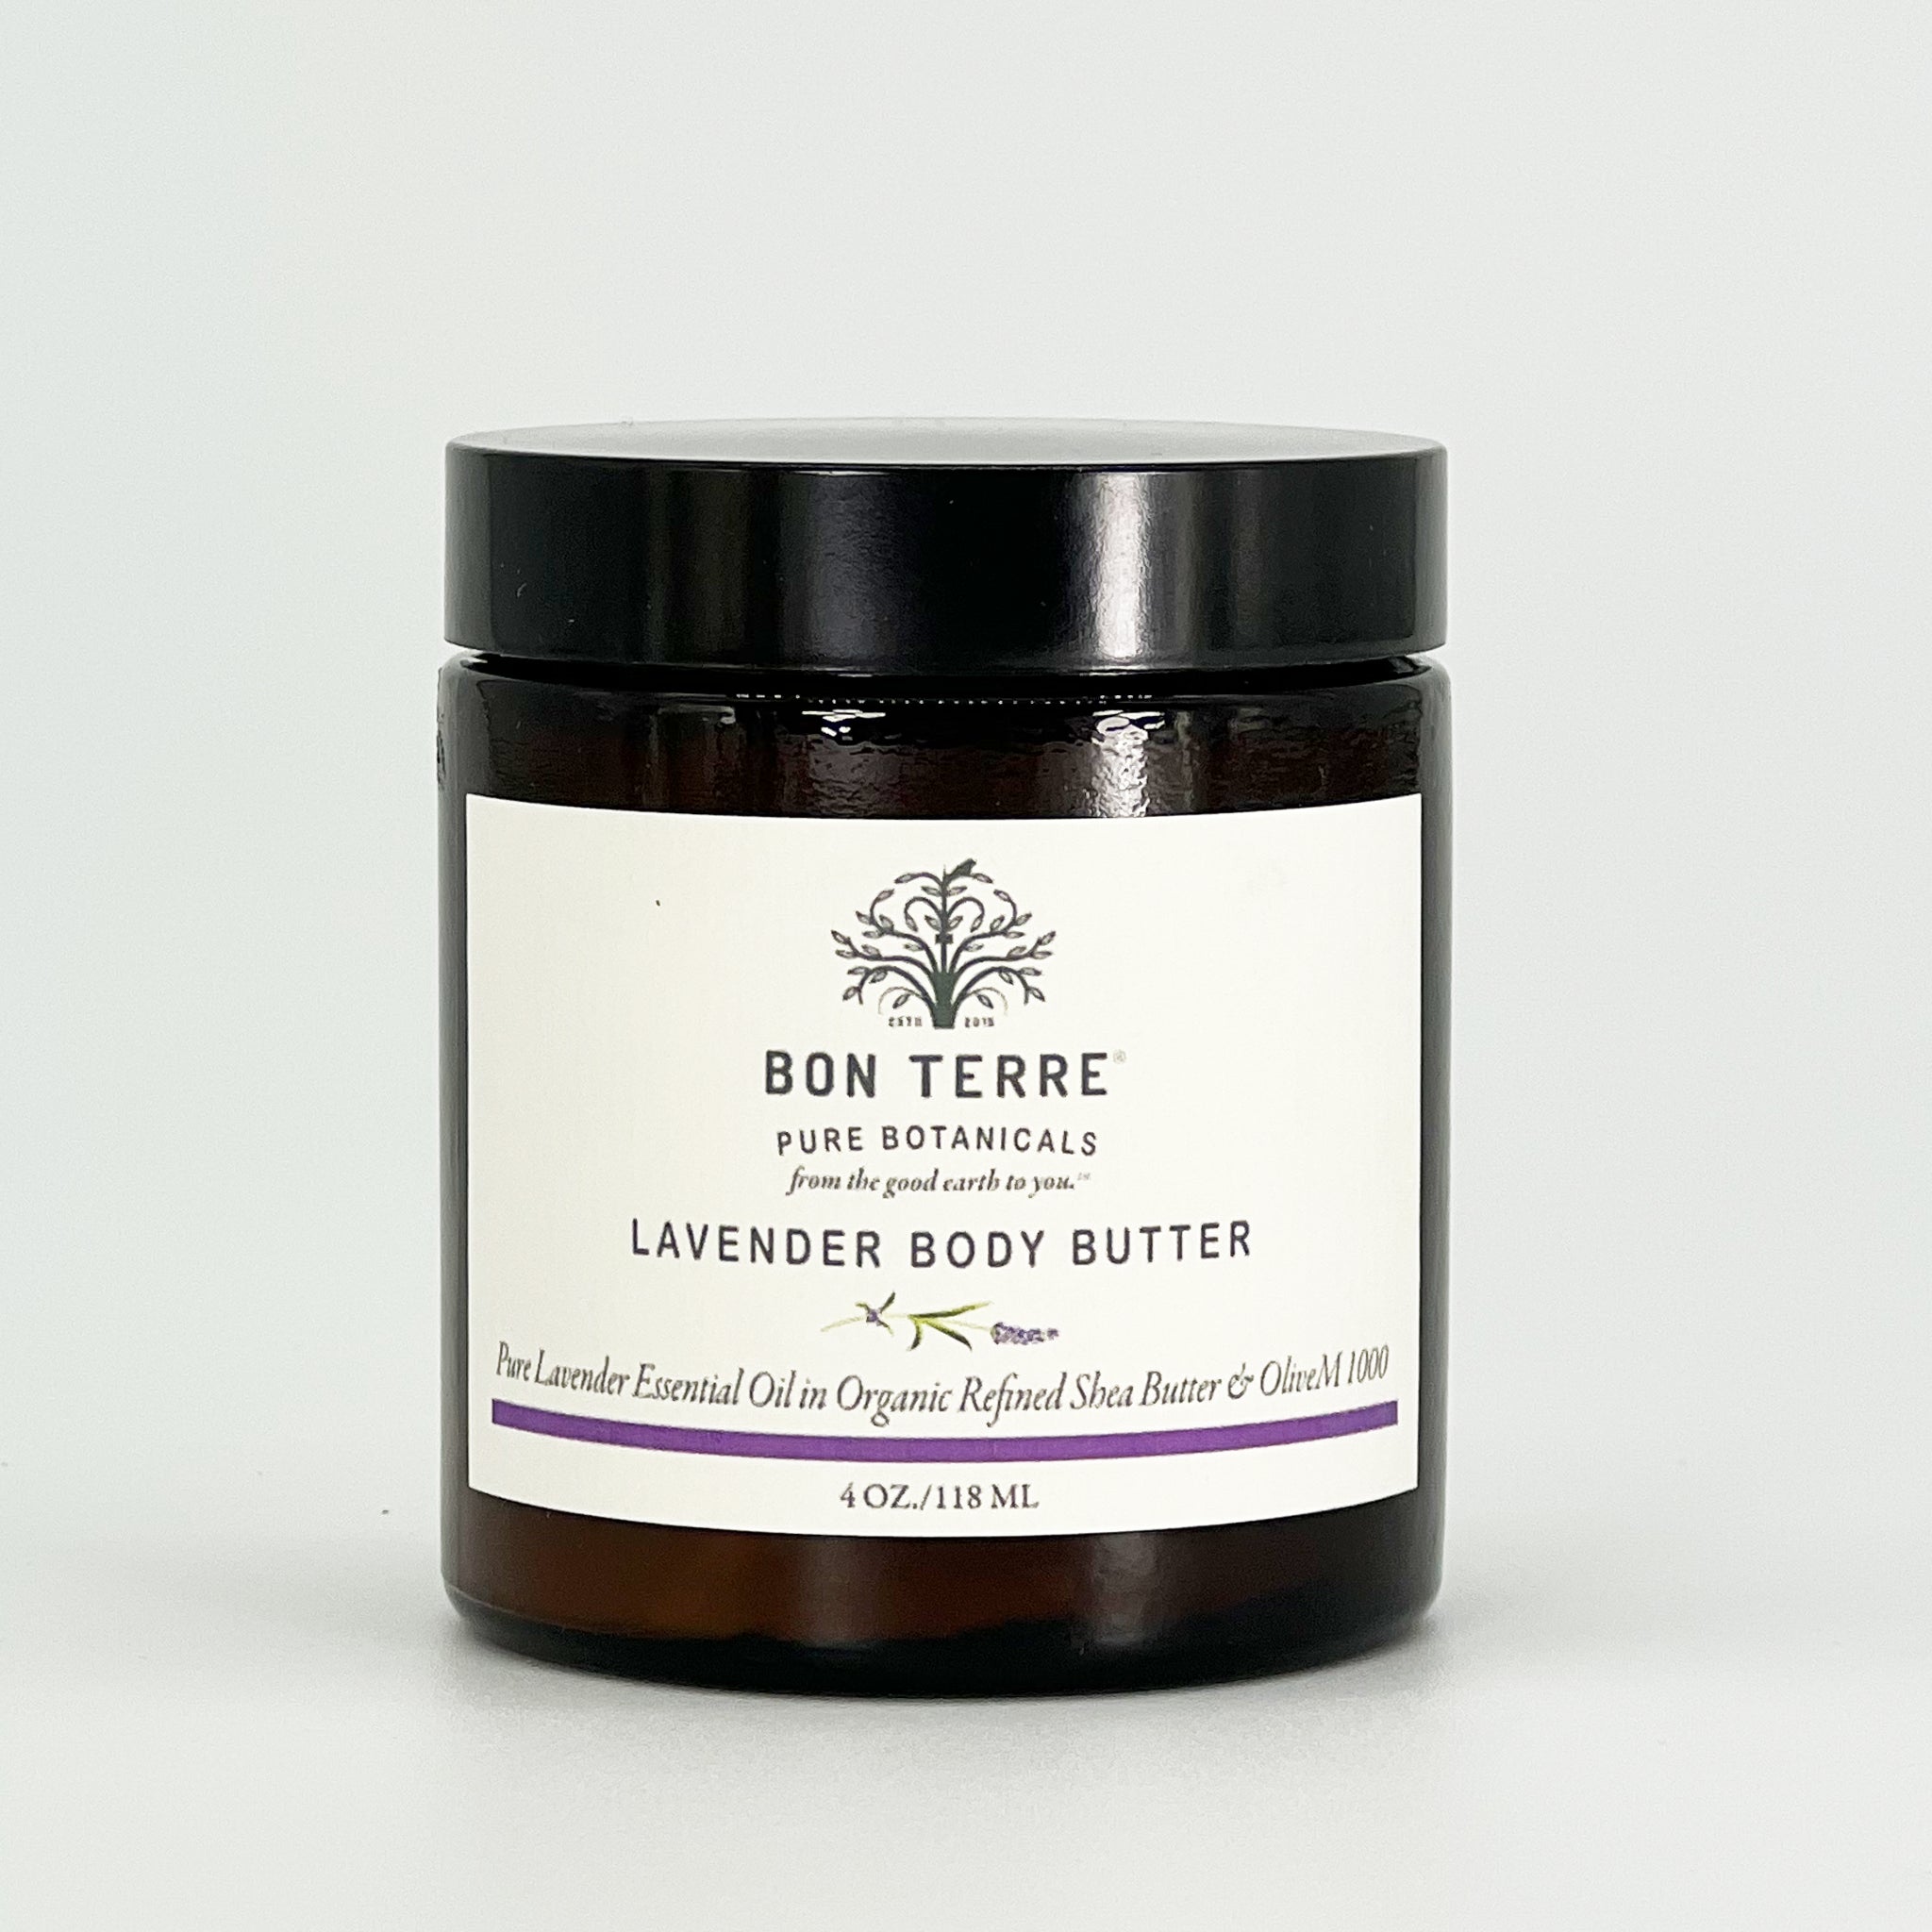 NEW! Lavender Body Butter - 4 oz.